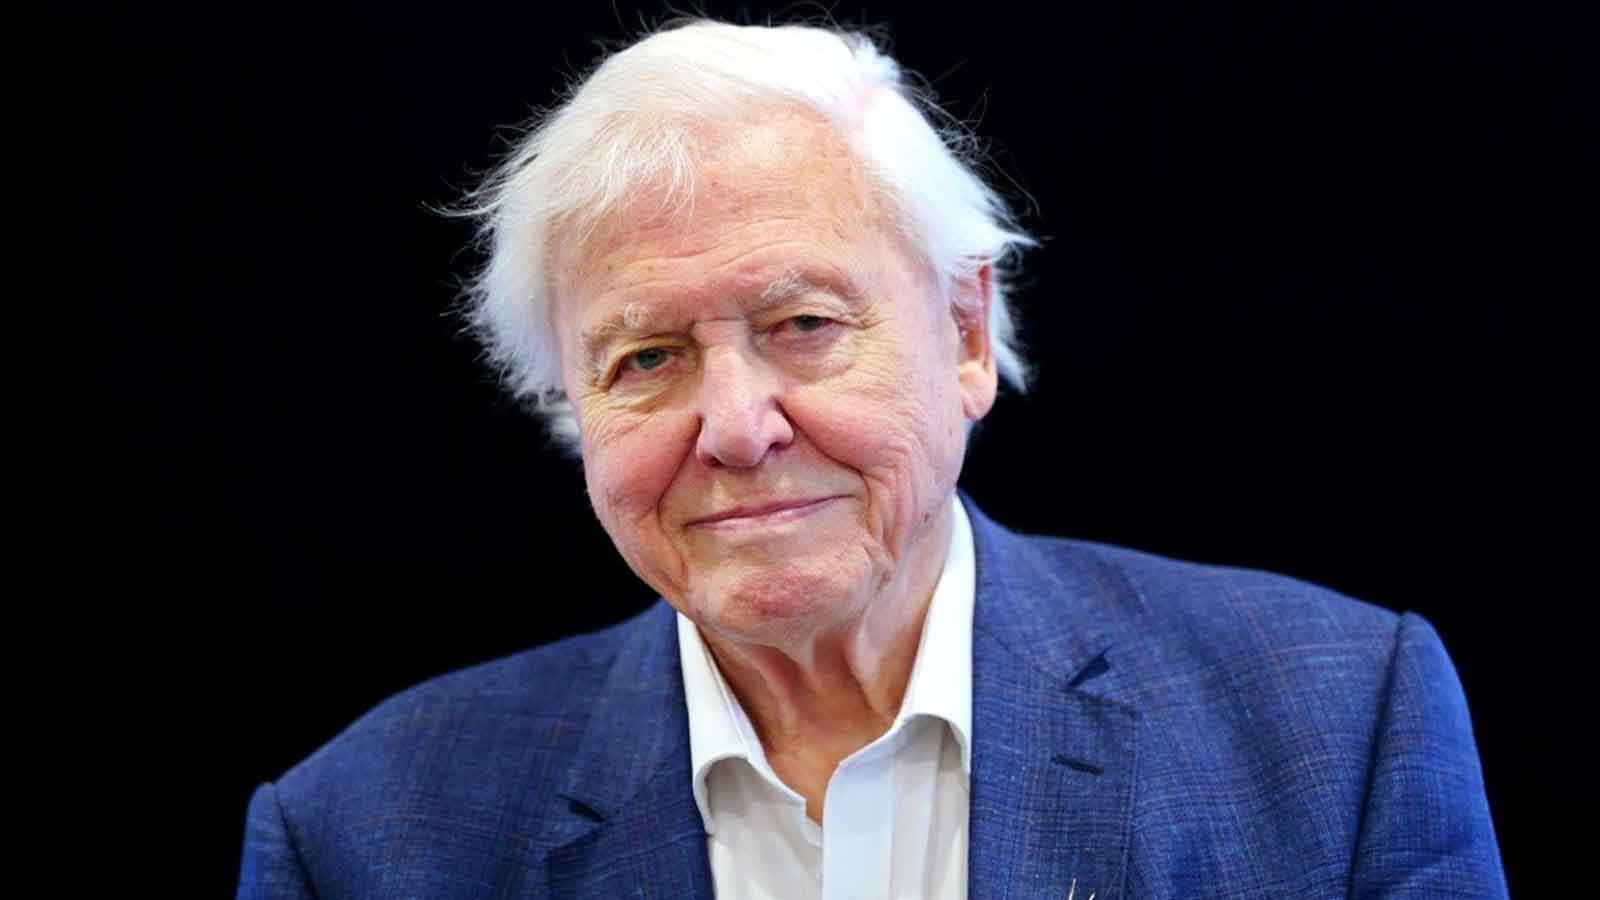 Sir David Attenborough Brother: Who Are Richard And John Attenborough